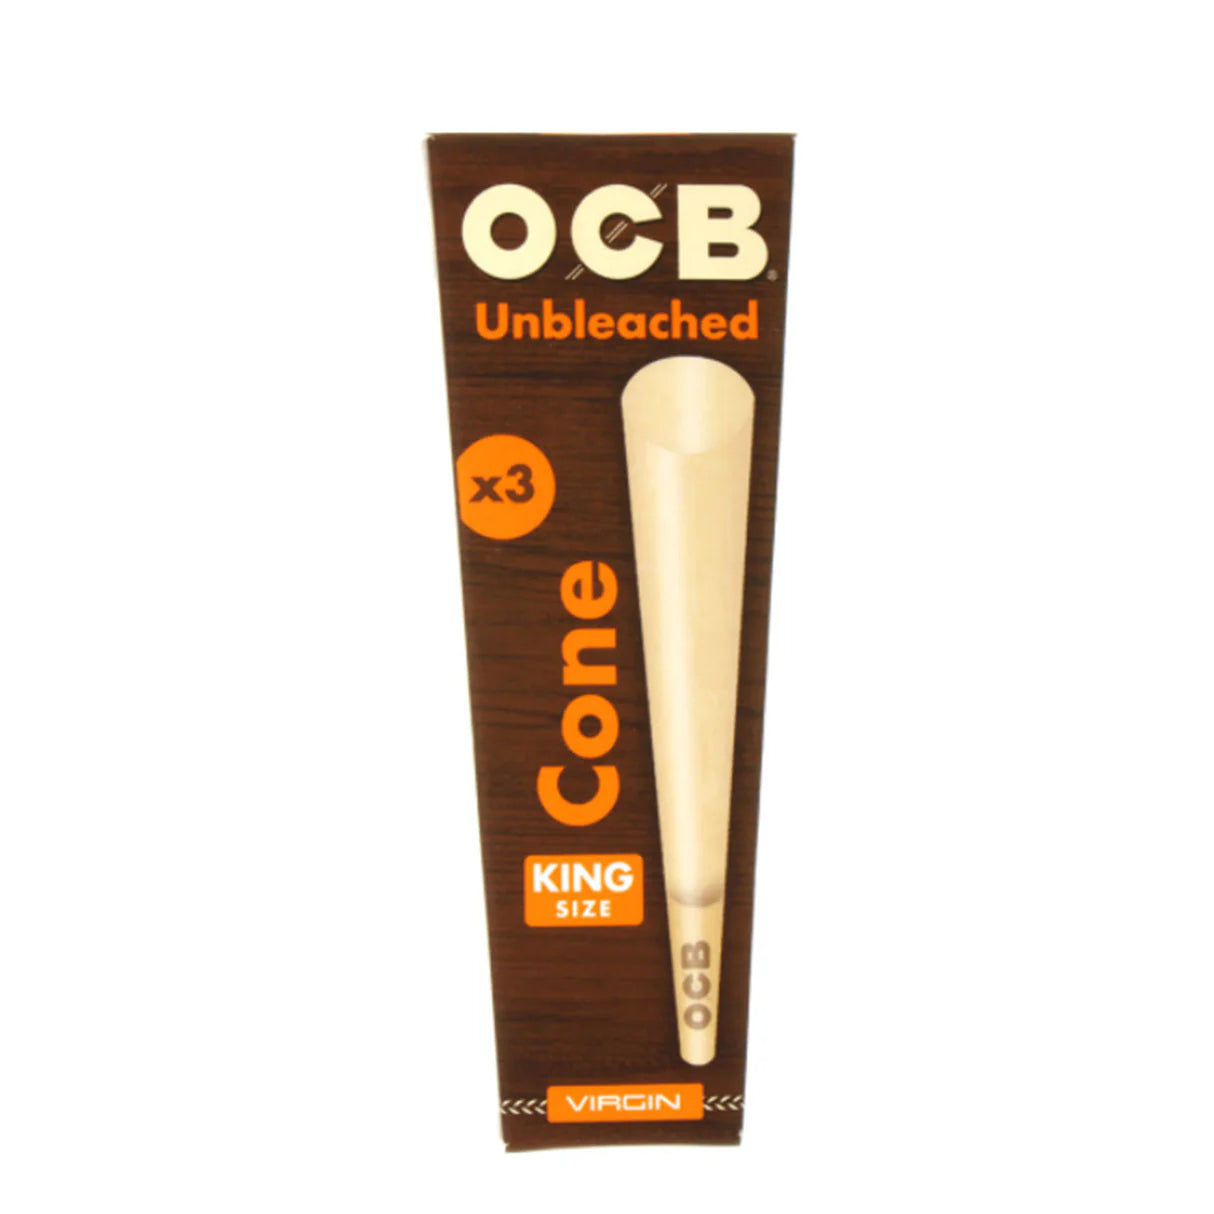 OCB Cones - Virgin (King Size)(3ct)